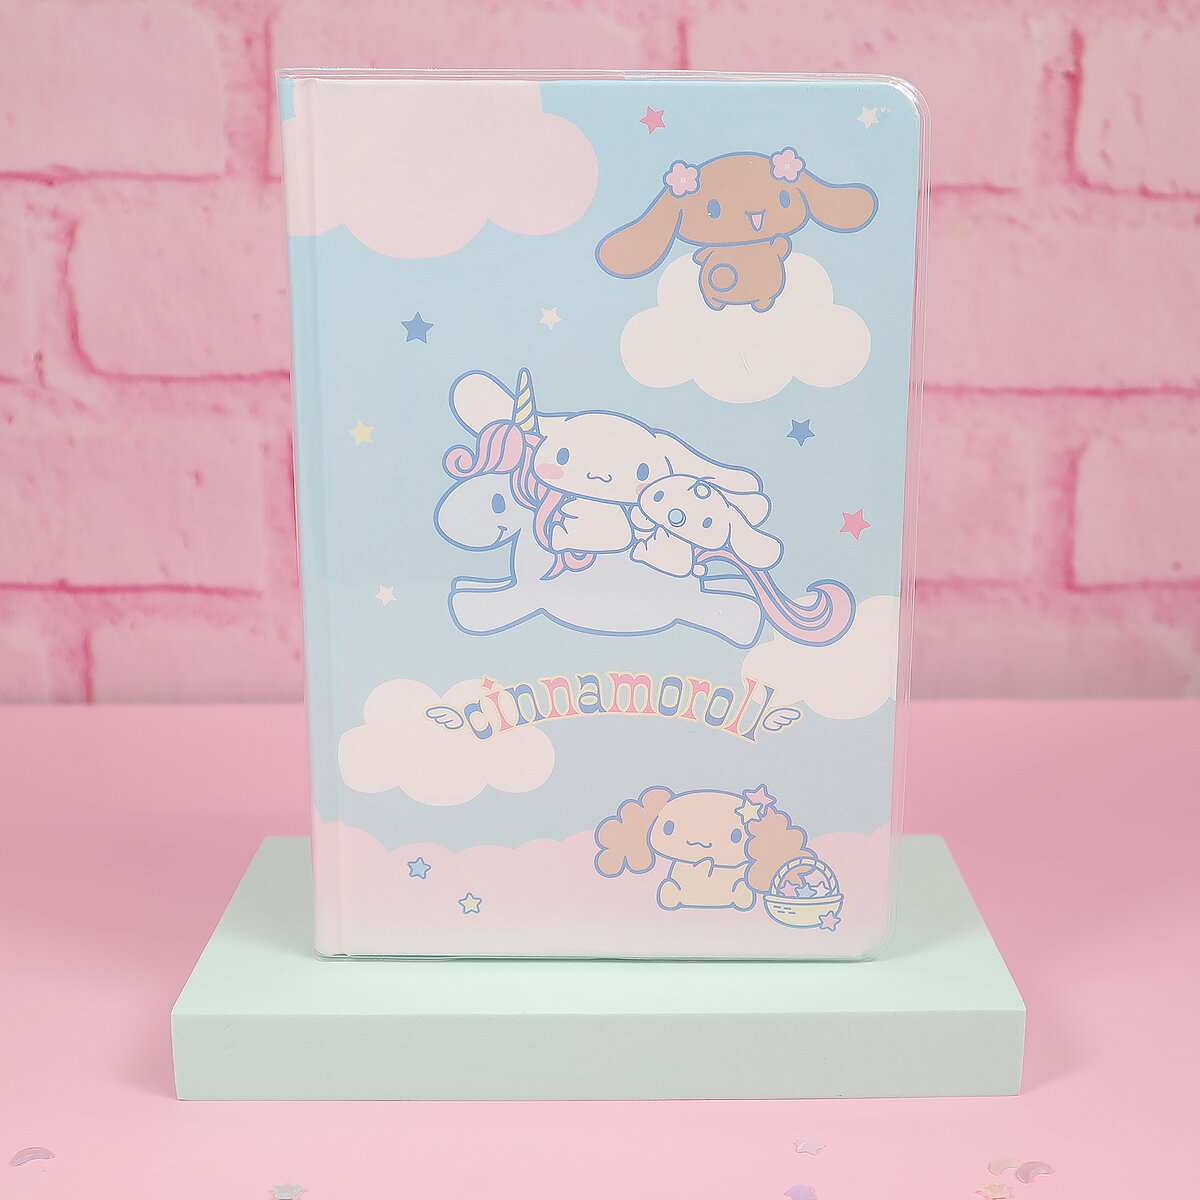 Sanrio anteckningsbok med plastomslag